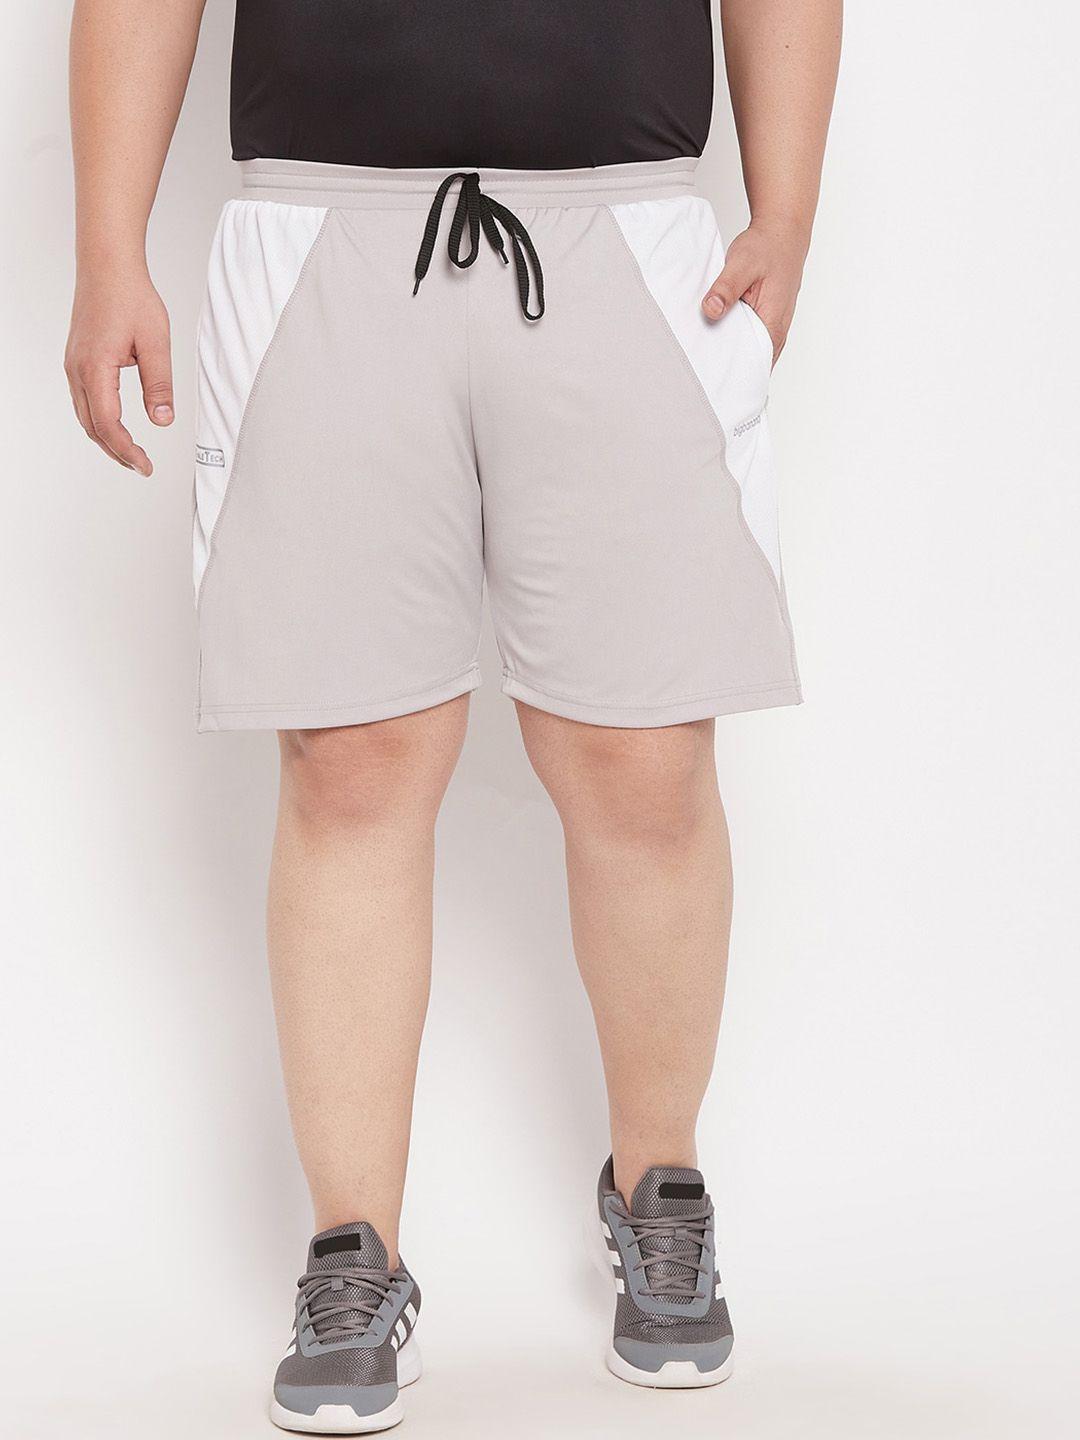 bigbanana-men-plus-size-cream-coloured-sports-shorts